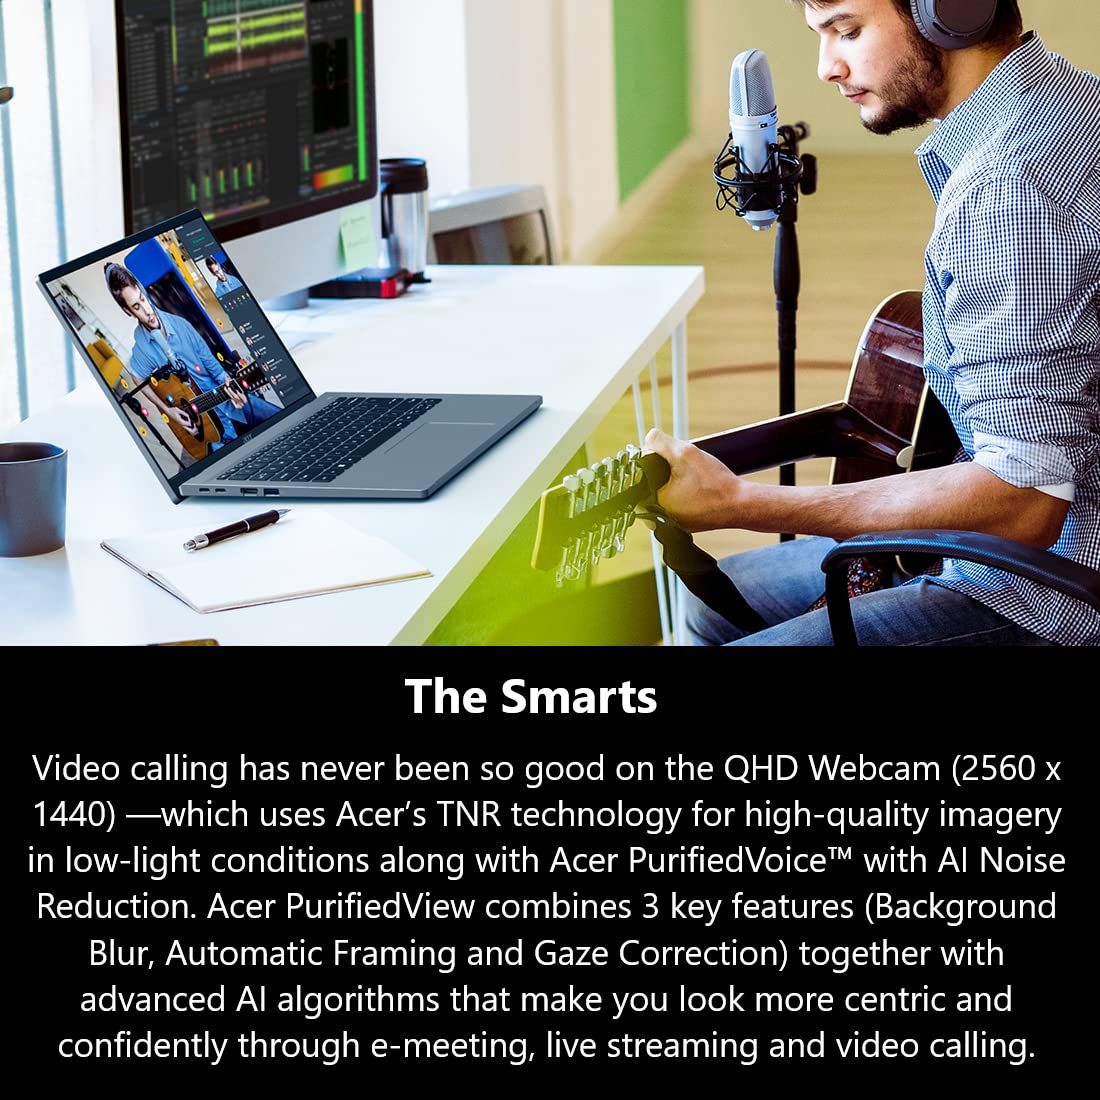 Acer Swift Go 16 Intel Evo Thin & Light Laptop | 16